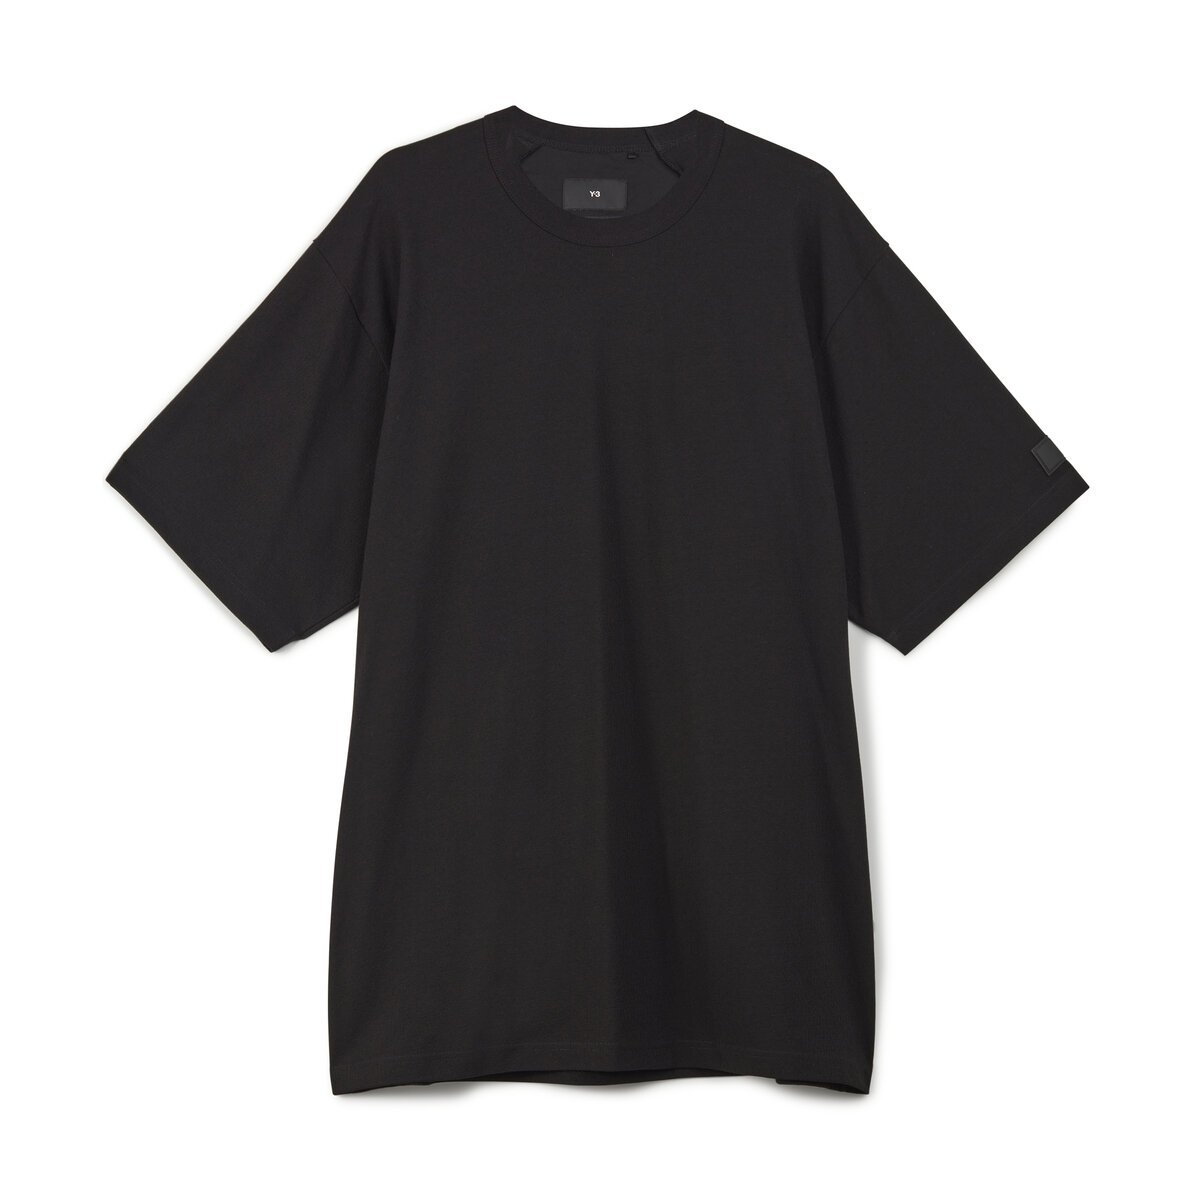 Crep Jersey T-shirt S Black